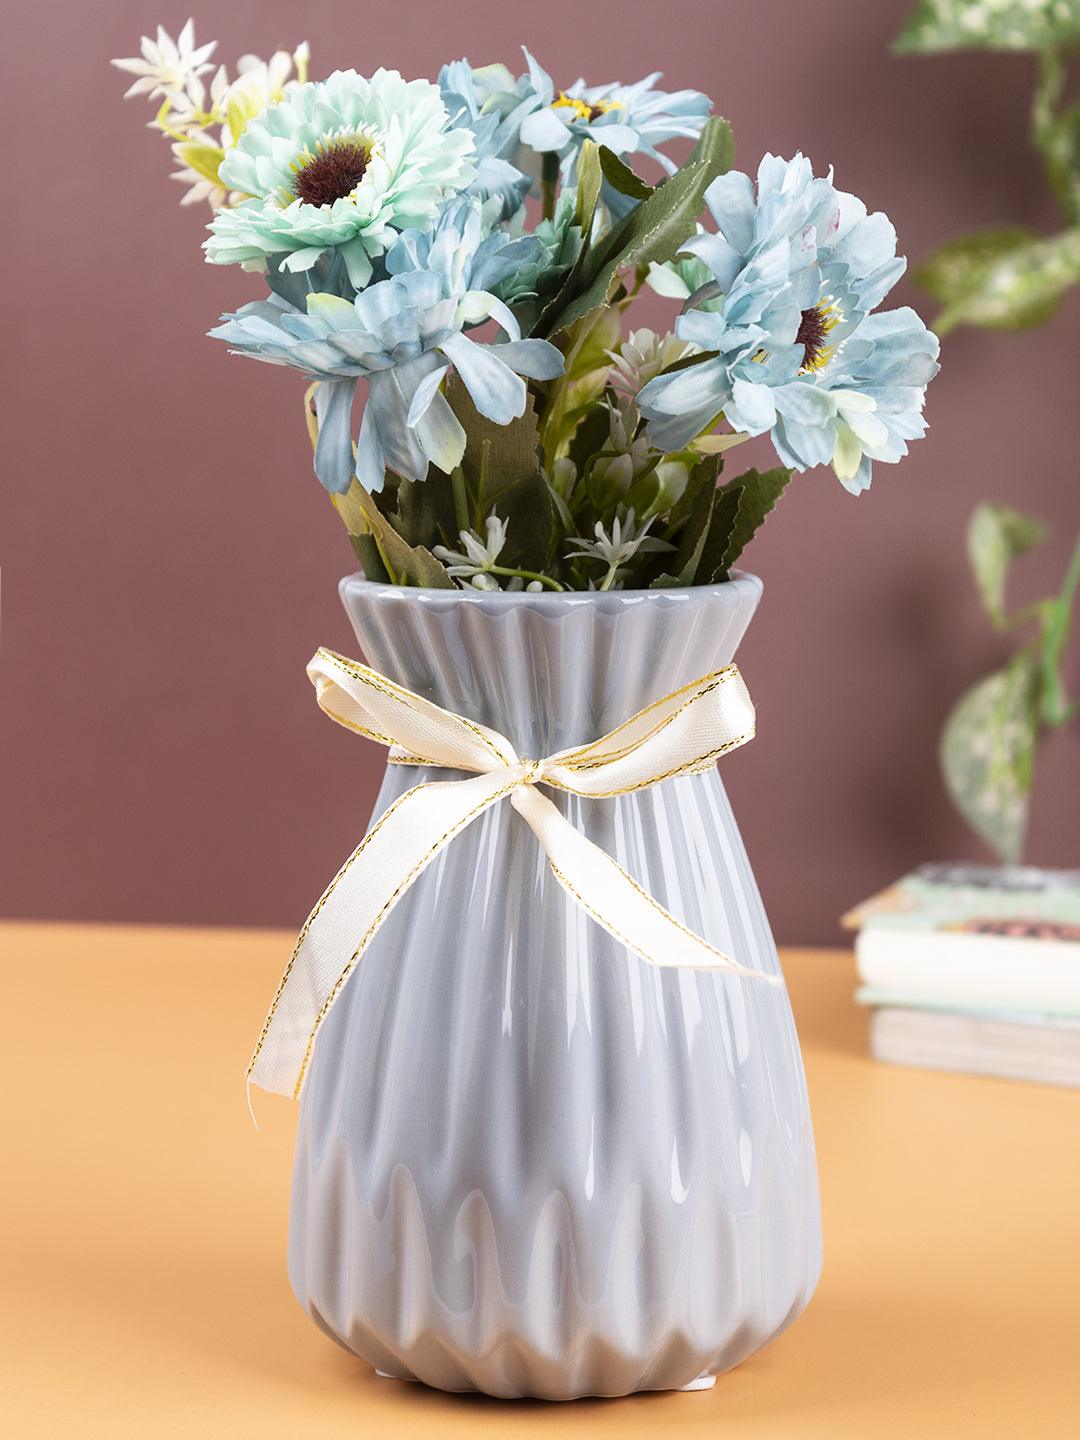 Nordic Vase, Grey, Ceramic - MARKET 99